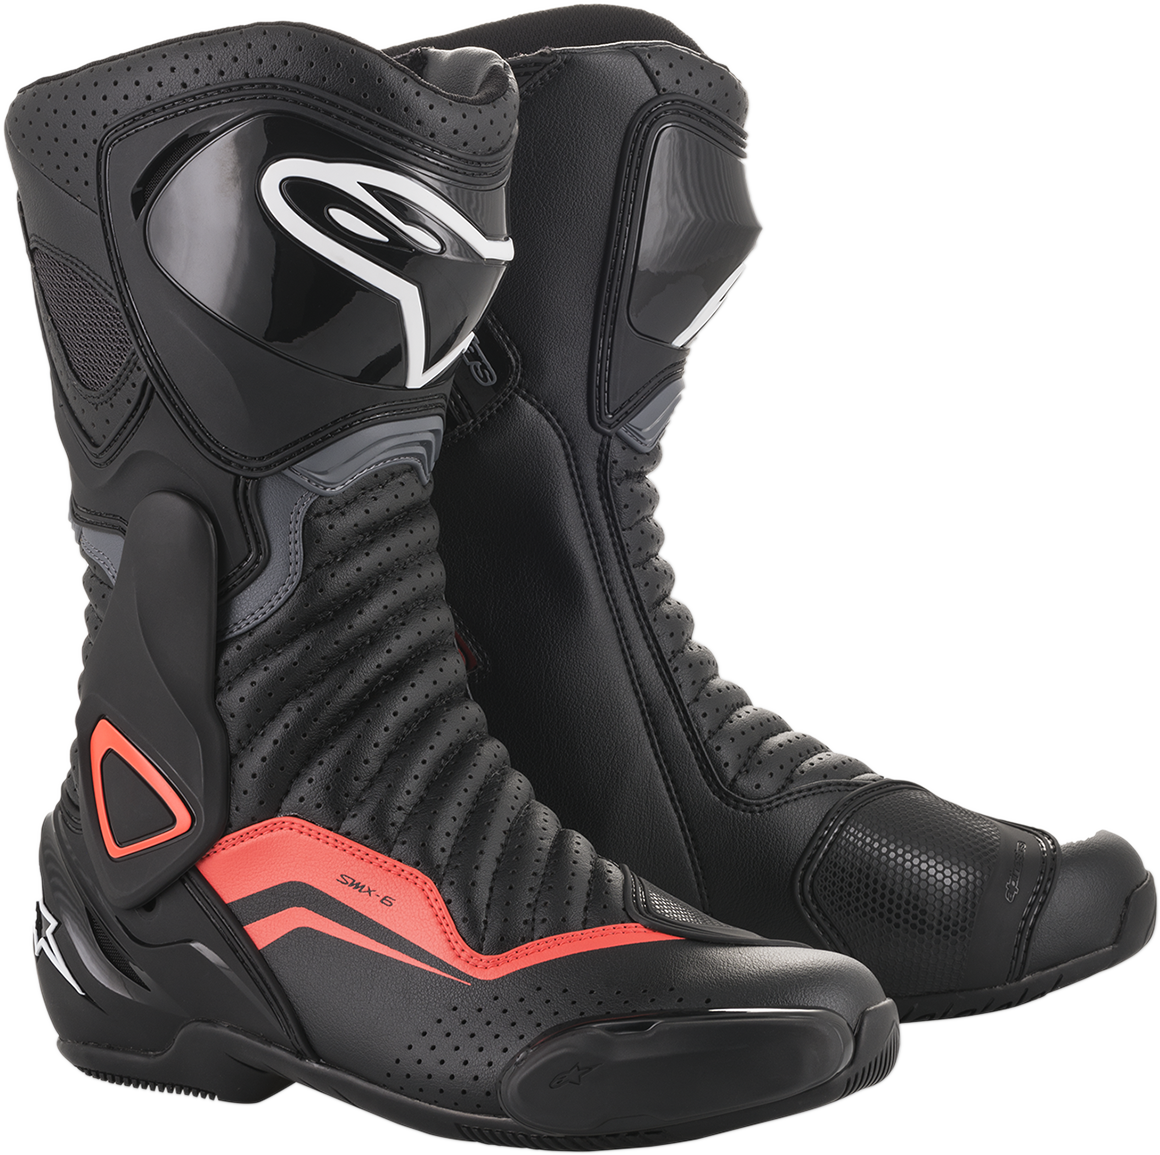 ALPINESTARS SMX-6 v2 Vented Boots - Black/Gray/Red - US 6.5 / EU 40 2223017-1133-40